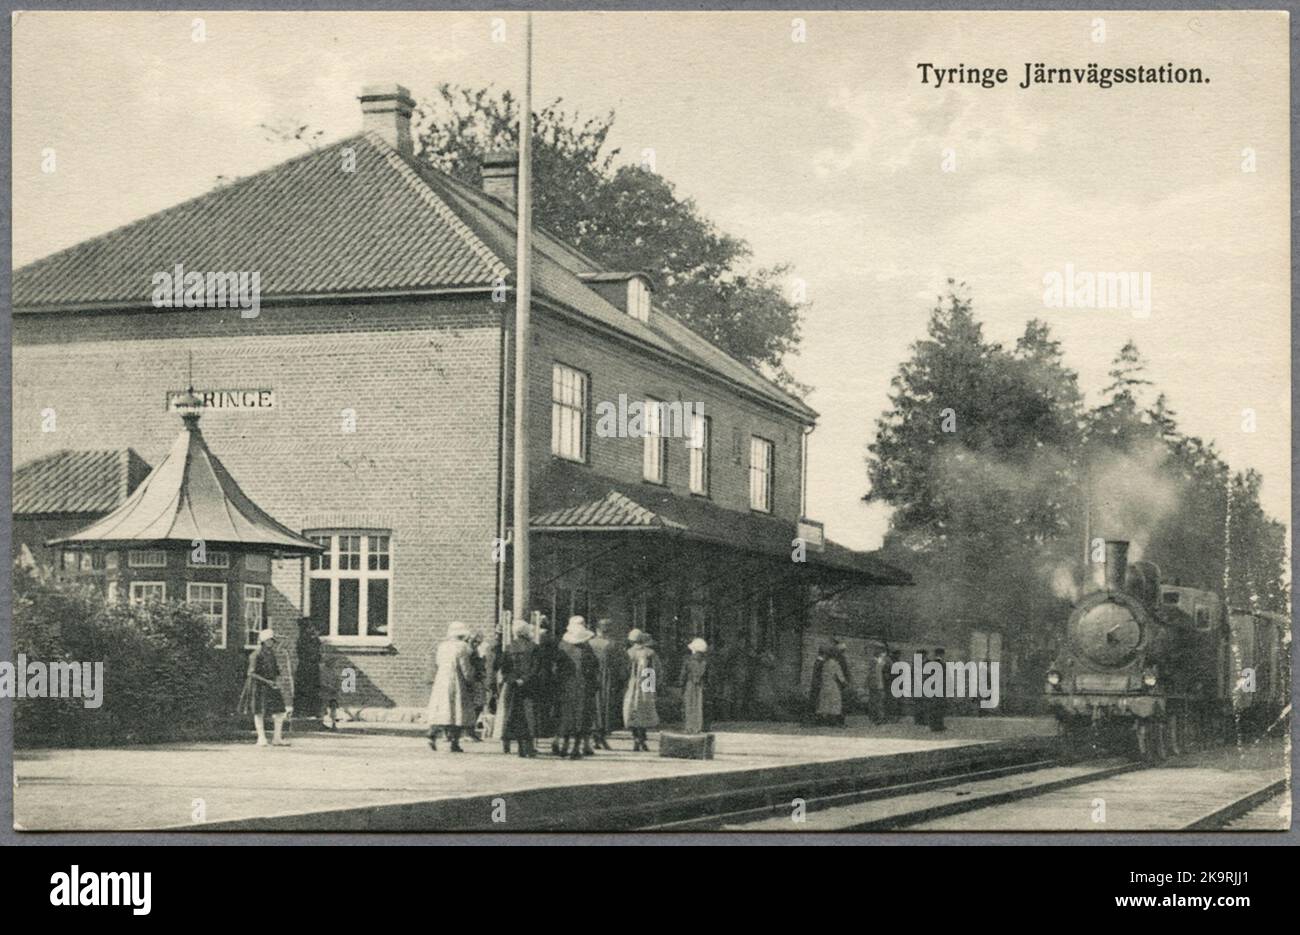 The railway station in Tyringe. Stock Photo